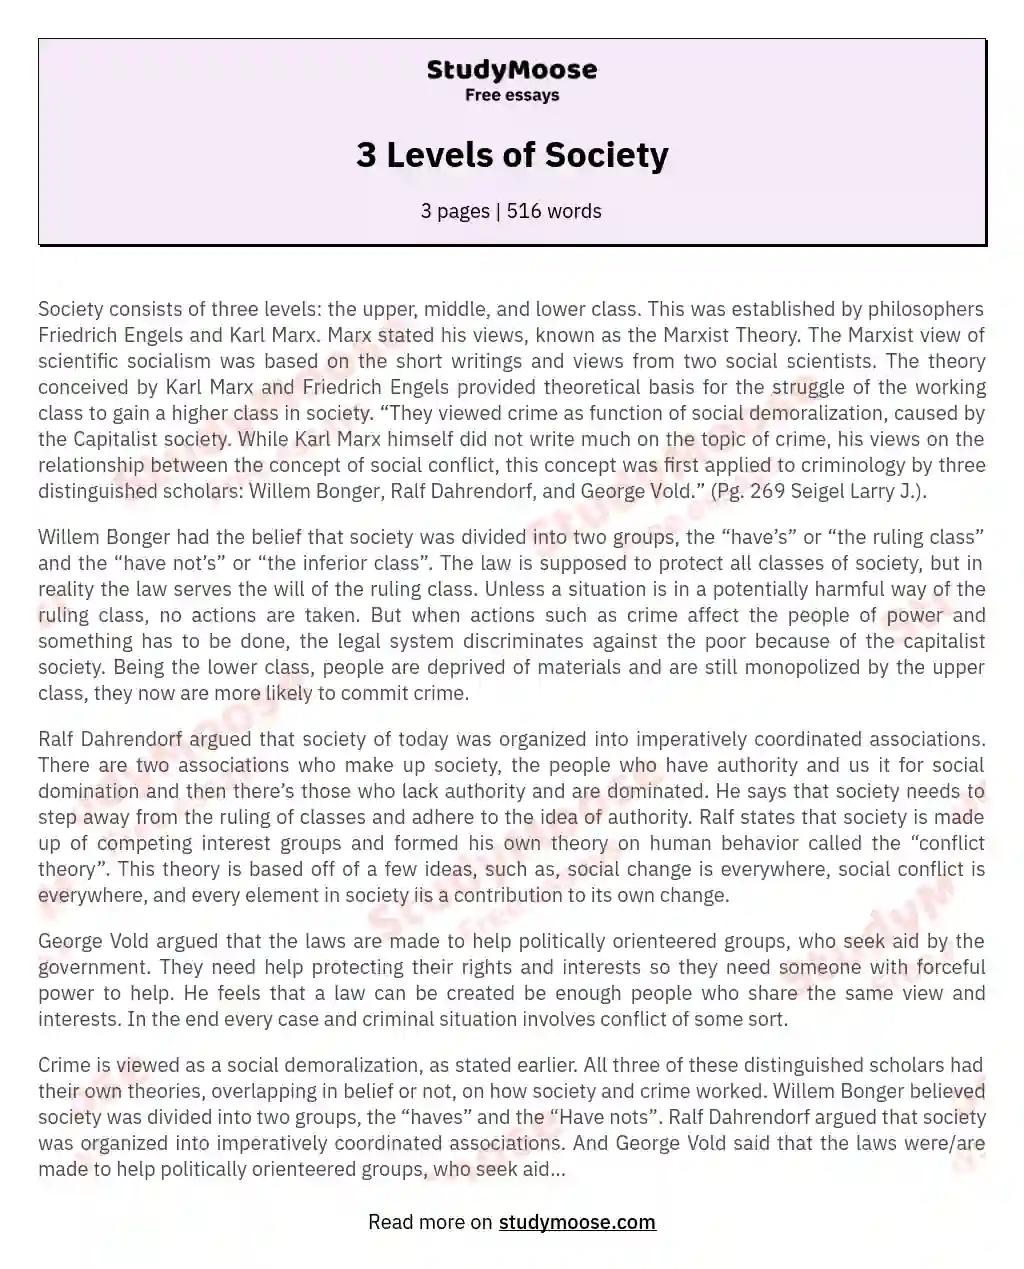 3 Levels of Society essay